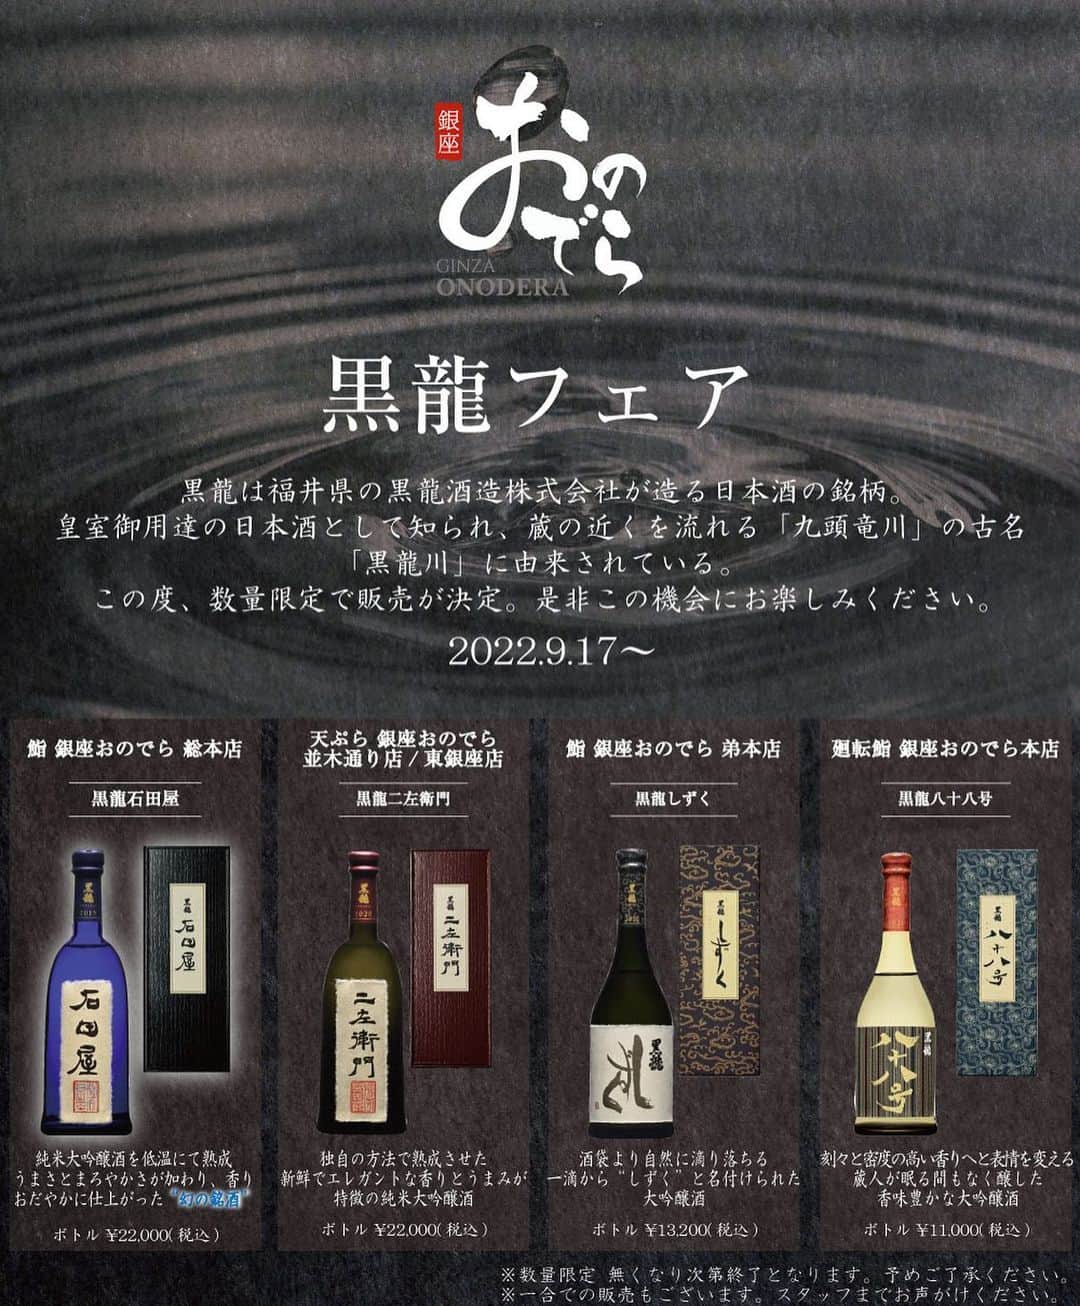 Ginza ONODERA Groupのインスタグラム：「. 【黒龍フェア開催中】 黒龍とは福井県にある黒龍酒造が生み出す銘酒。 皇室御用達の日本酒として知られ、 希少価値が高く『幻の日本酒』と言われています。  この度、銀座おのでら 対象店舗にて 数量限定の黒龍フェアを開催しております! 無くなり次第終了となりますので、 ぜひこの機会にお楽しみください。  ※一合での販売も行っております。 店舗スタッフまでお声がけくださいませ。  銀座おのでら  #ginzaonodera  #銀座おのでら  #天ぷら銀座おのでら並木通り店  #天ぷら銀座おのでら東銀座店  #鮨銀座おのでら弟本店  #廻転鮨銀座おのでら本店  #鮨  #寿司  #天ぷら  #廻転鮨  #黒龍  #黒龍石田屋  #黒龍二左衛門 #黒龍しずく  #黒龍八十八号」